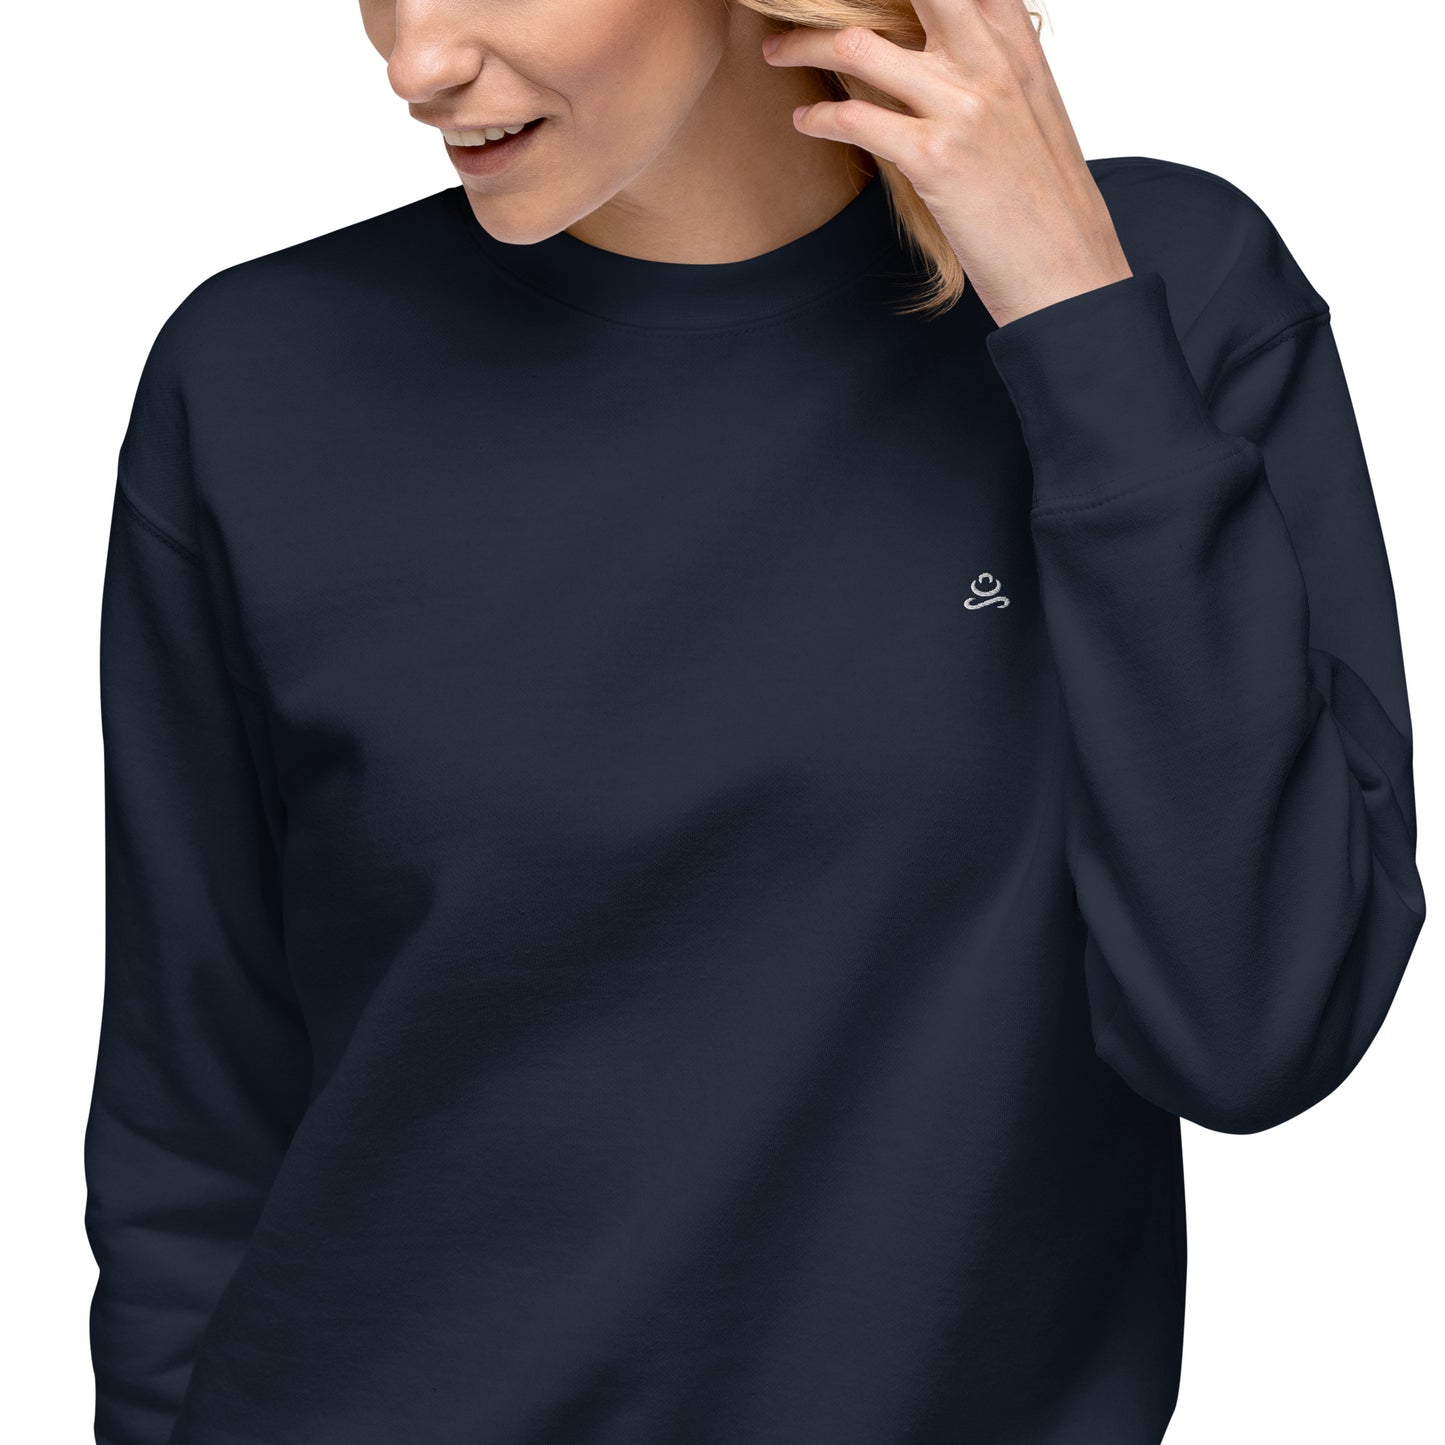 Navy Blazer Women's Premium Cotton Sweatshirt by Women's Premium Cotton Sweatshirt sold by Jain Yoga